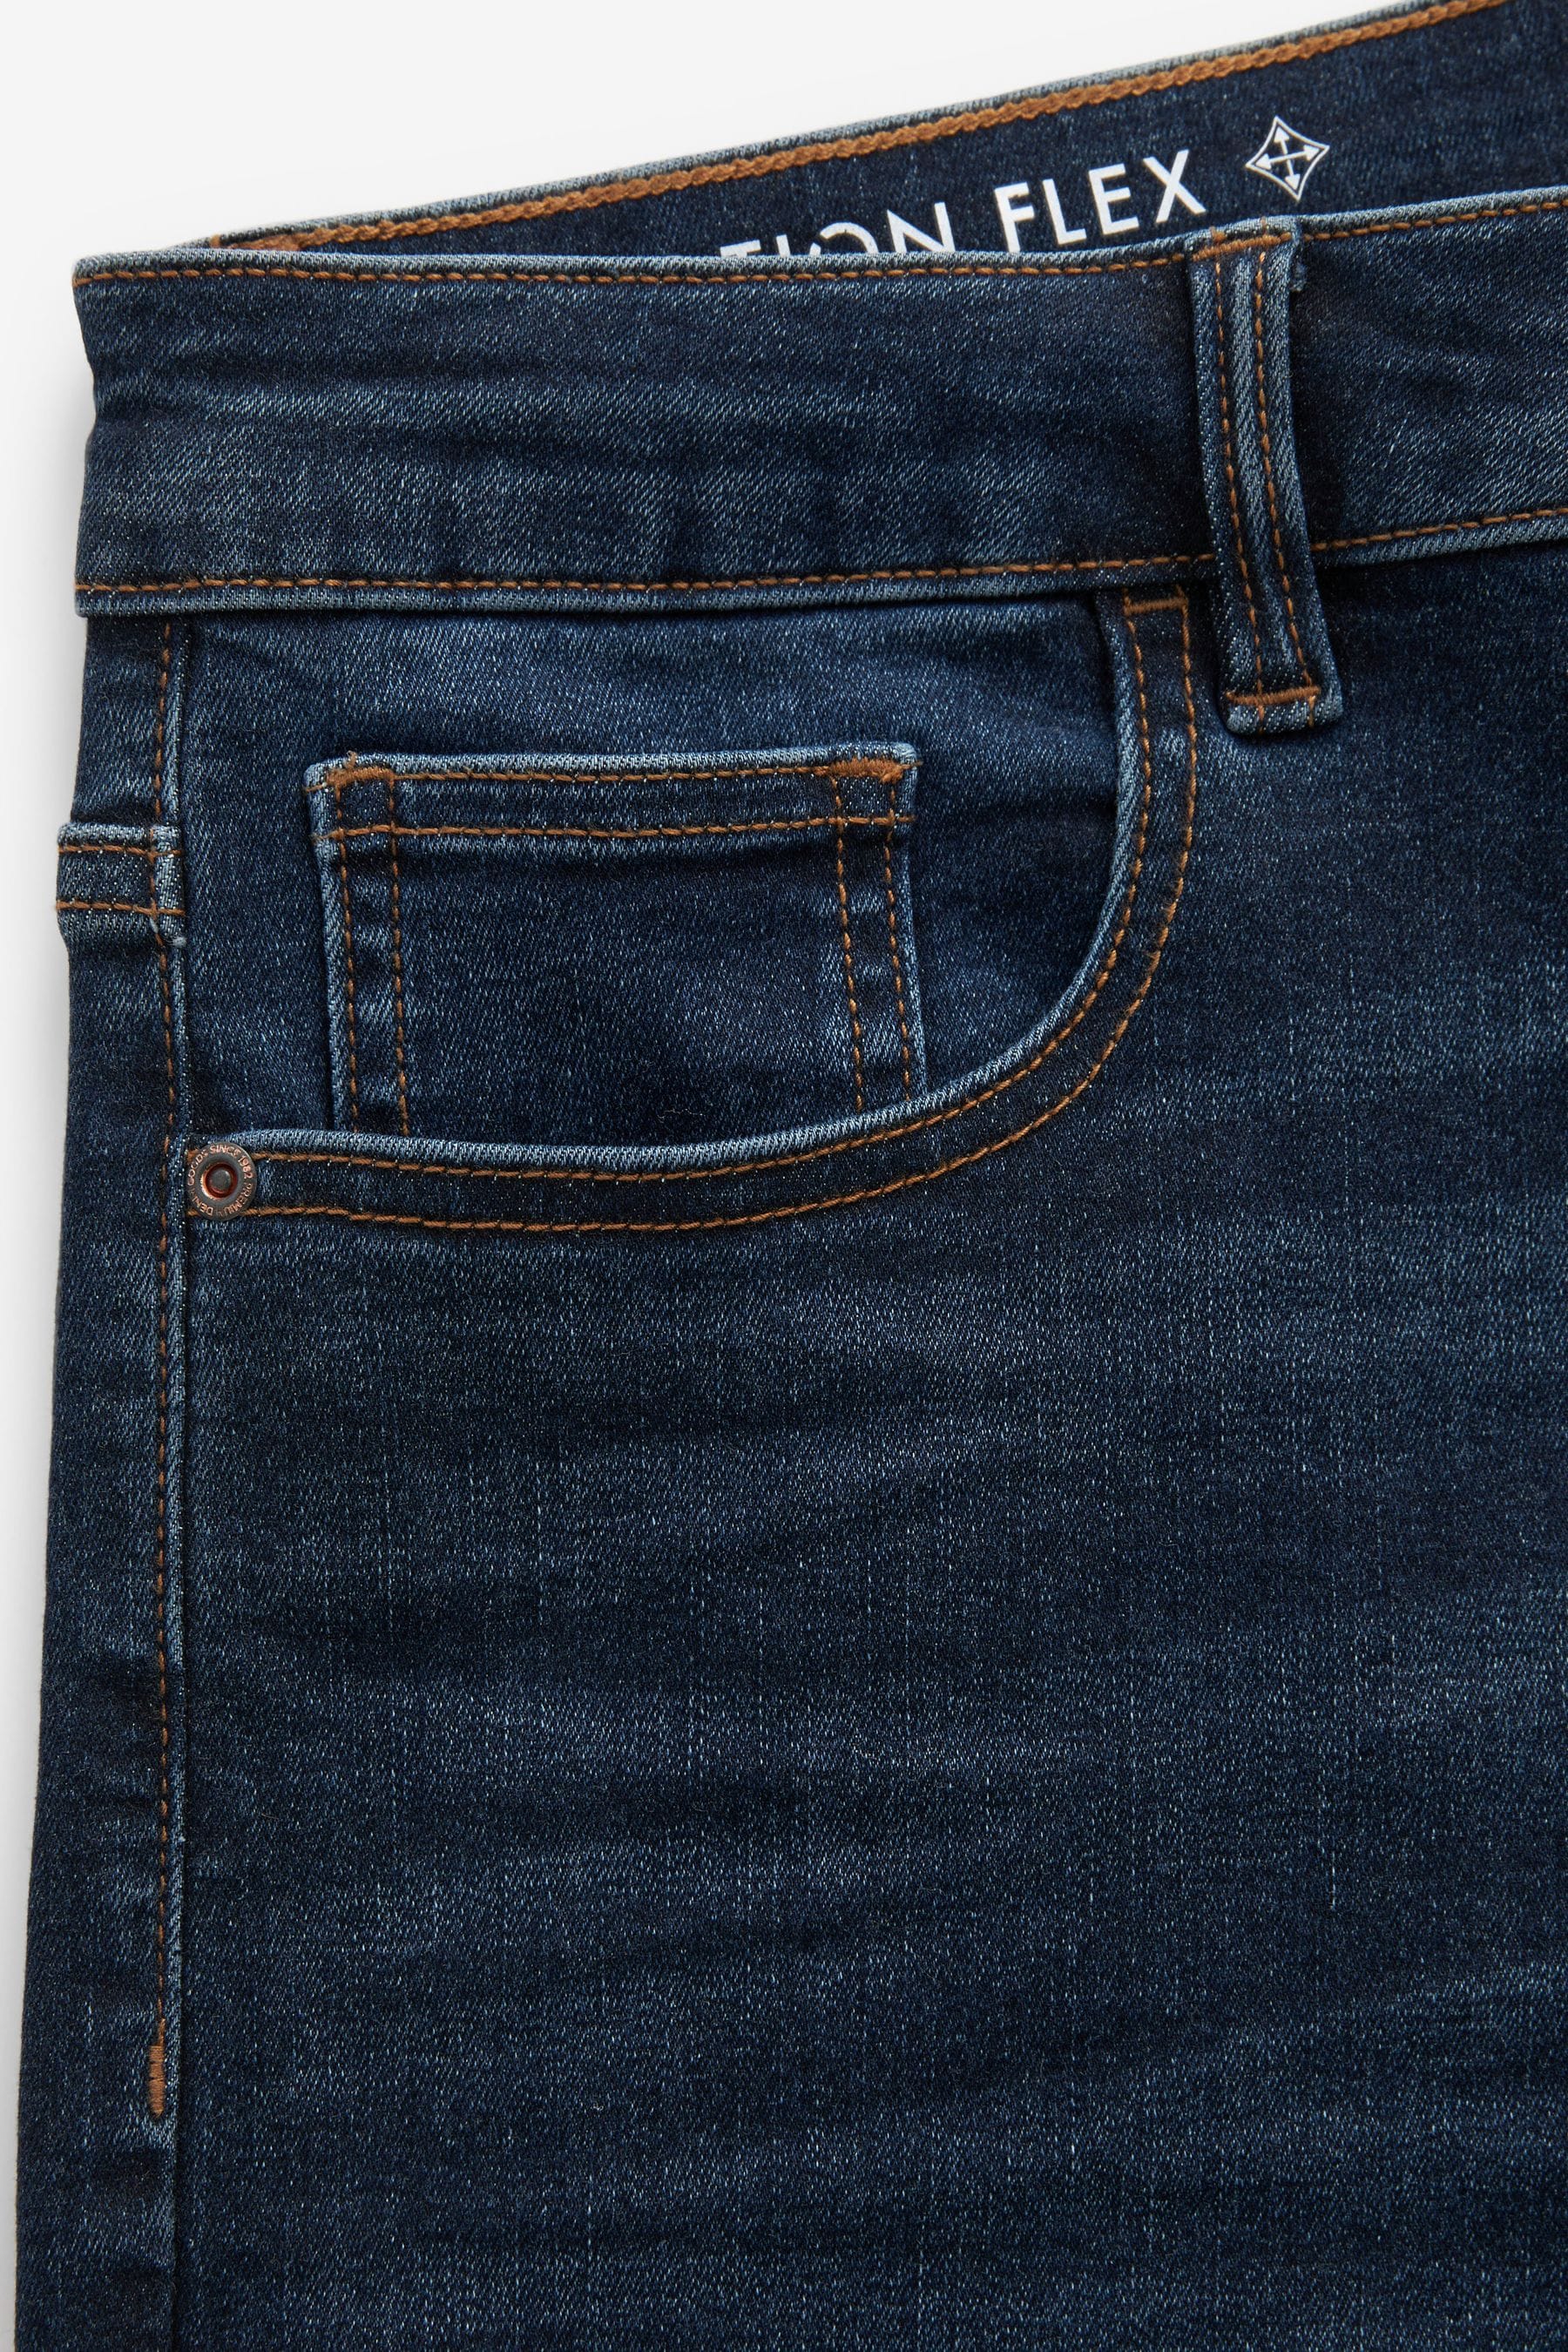 Buy Mid Indigo Blue Slim Motion Flex Jeans from the Next UK online shop